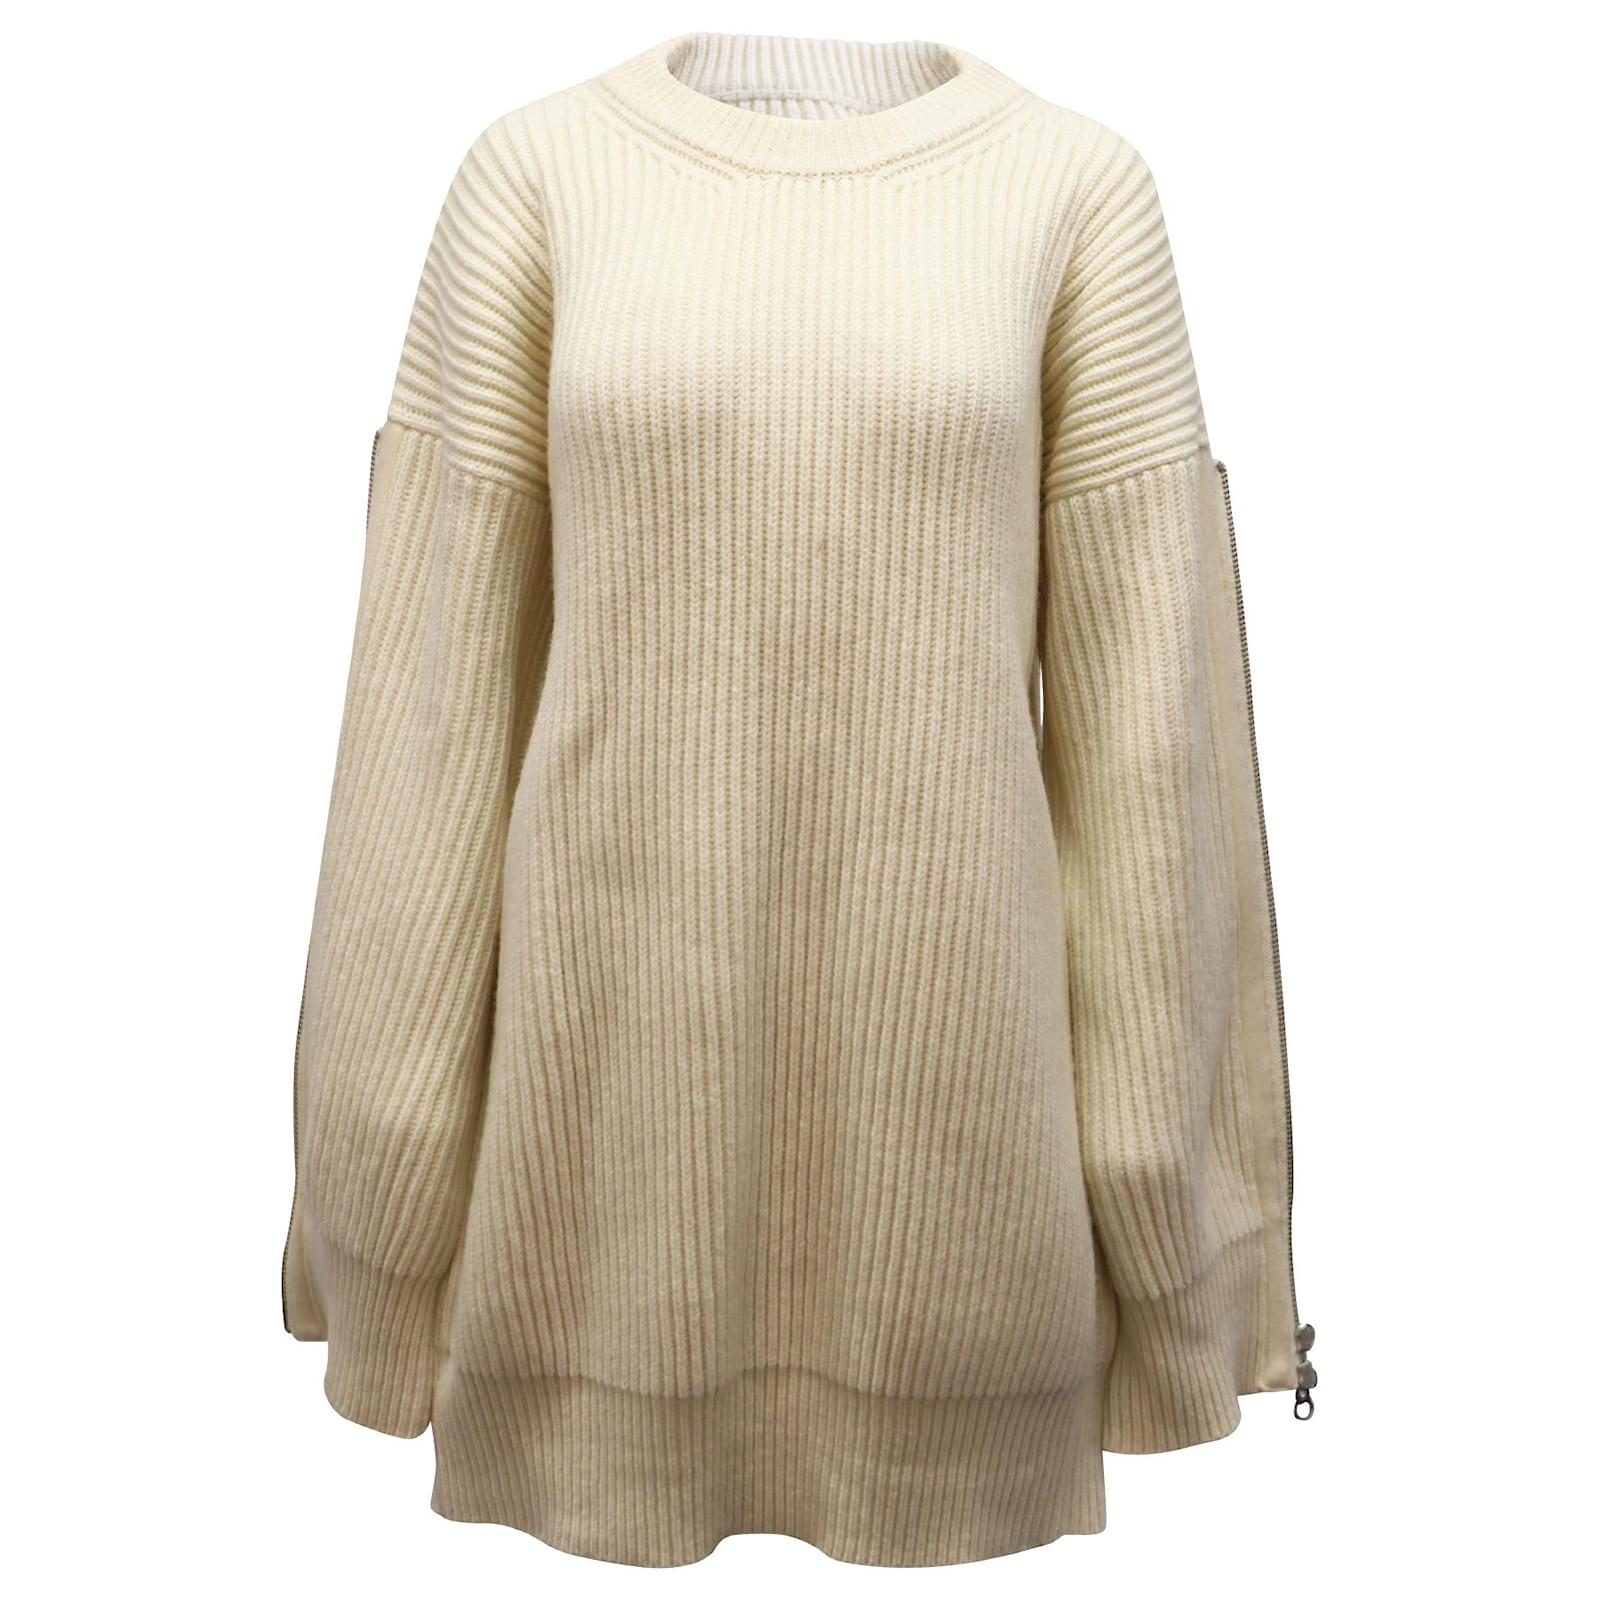 Maison Martin Margiela Convertible Chunky Knit Sweater in Cream Cotton Wool